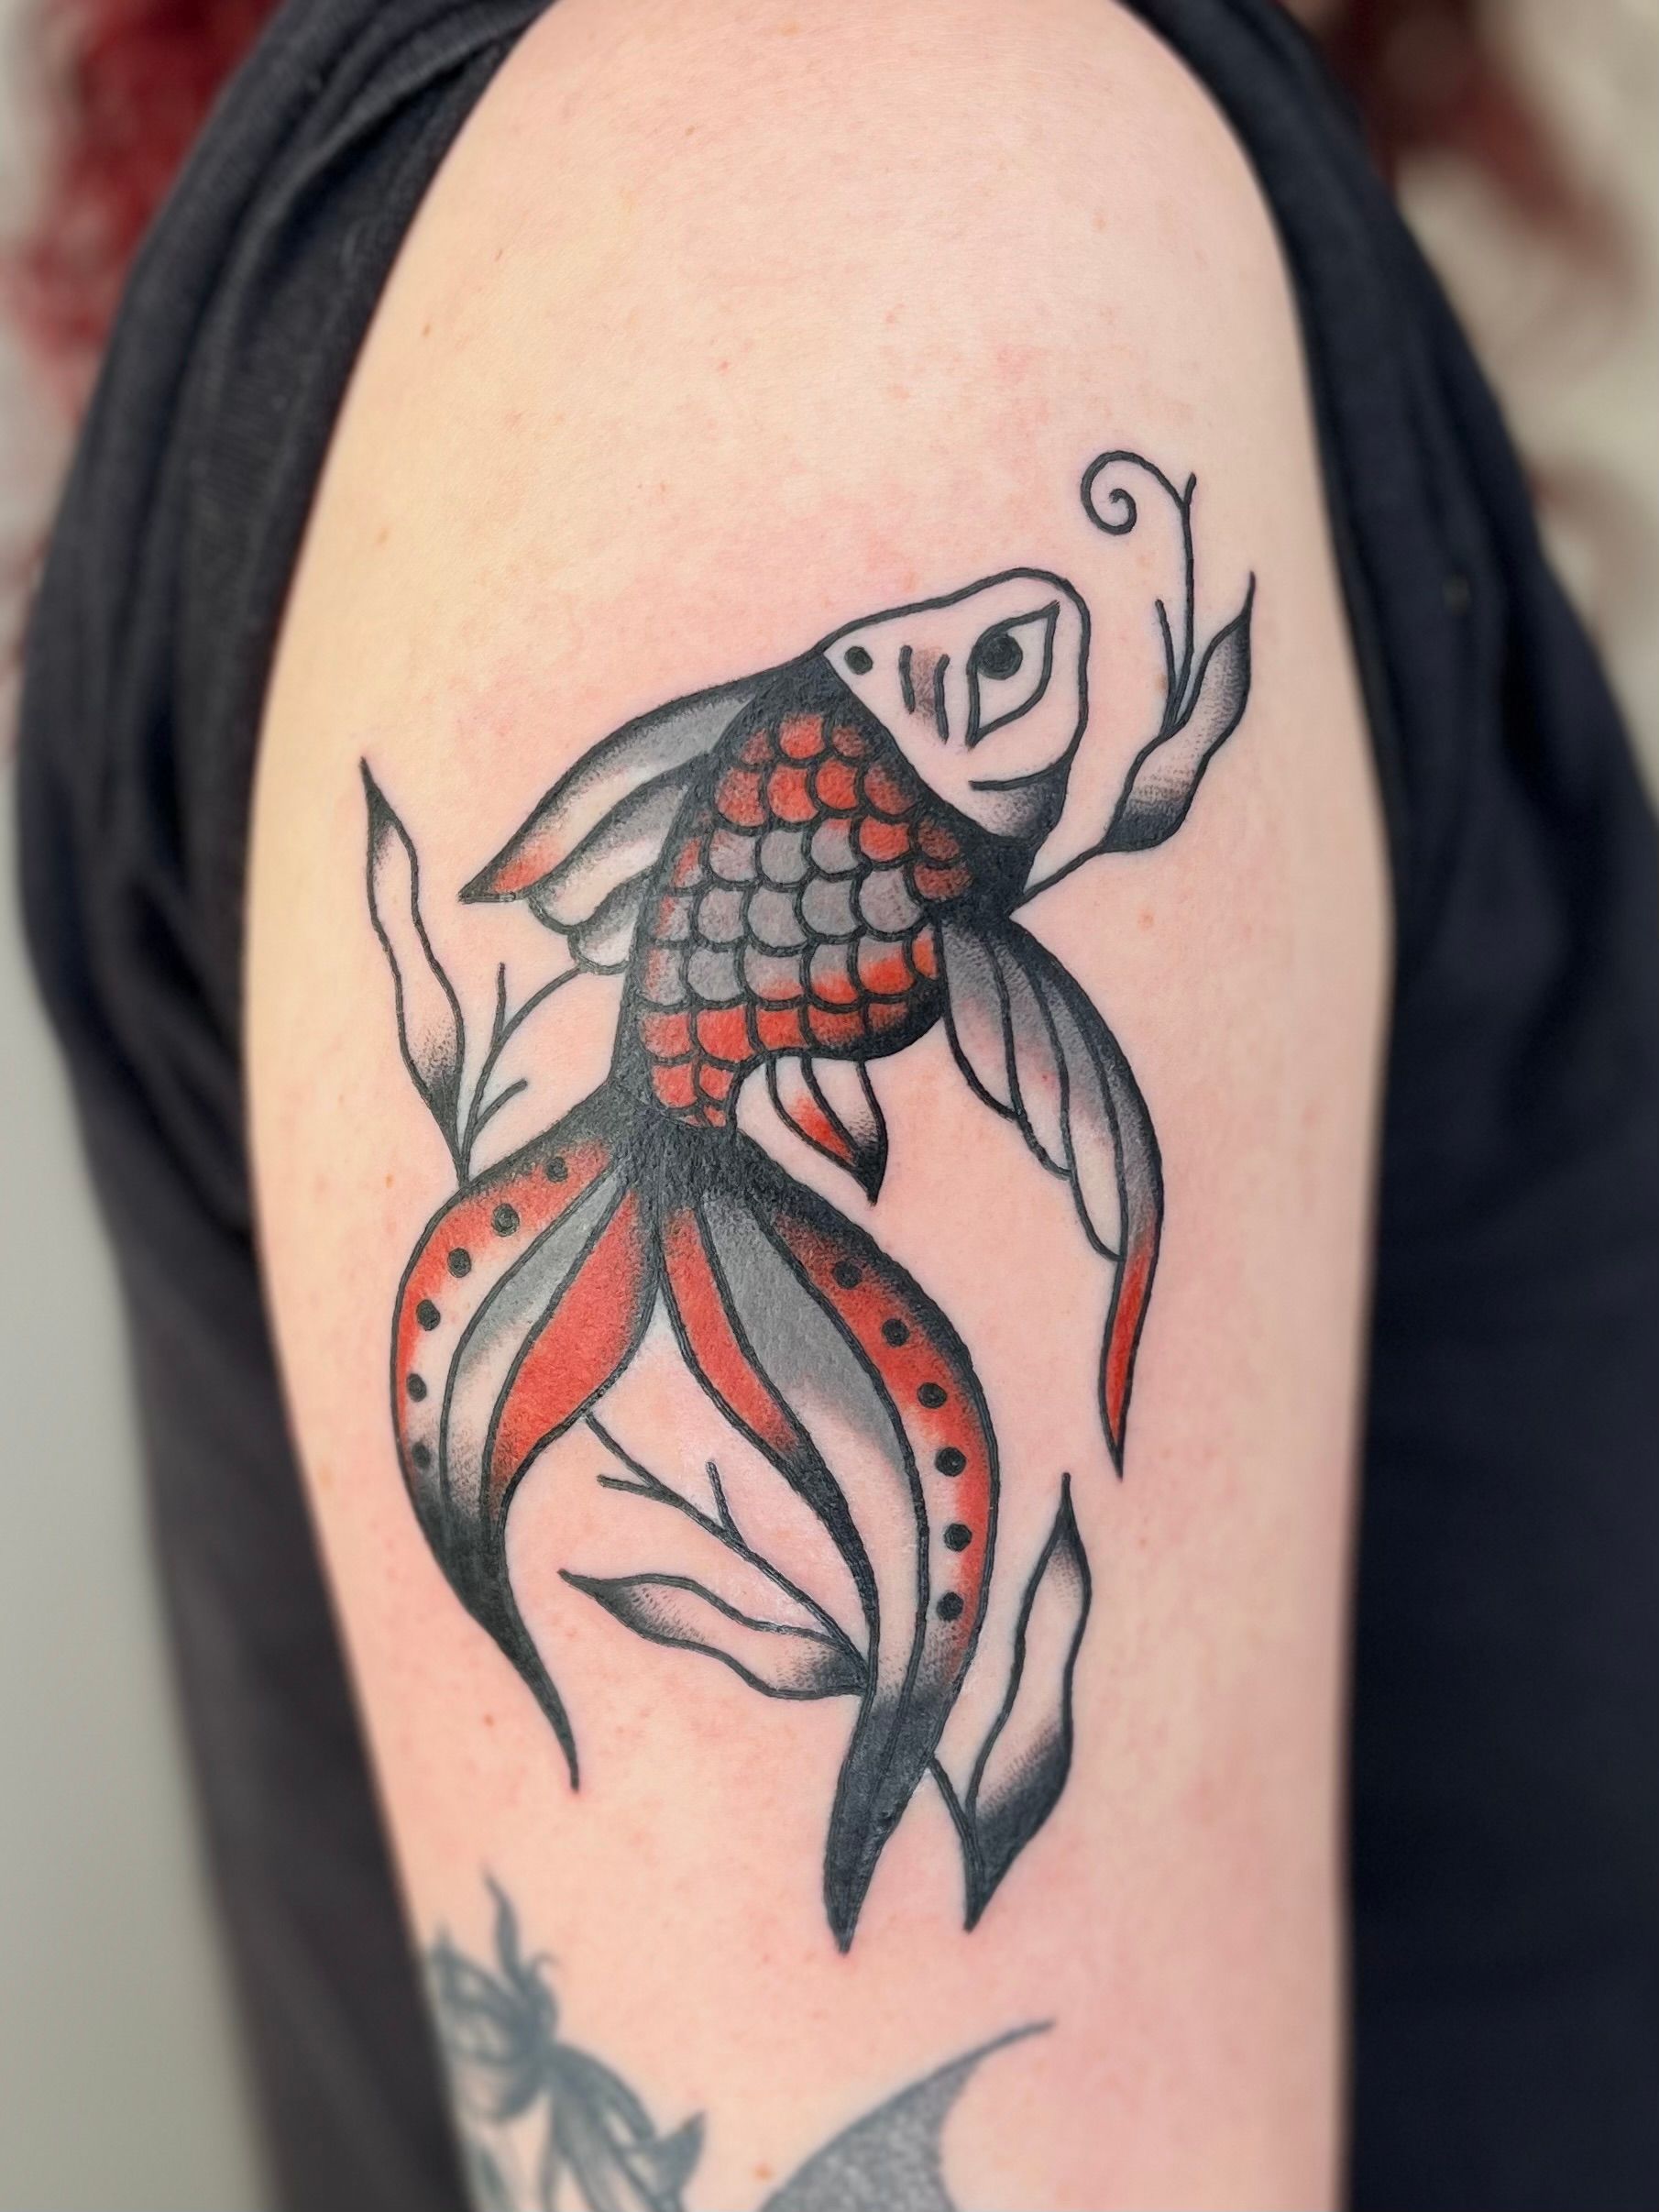 Painted Temple : Tattoos : New : Billy Williams Koi fish Tattoo